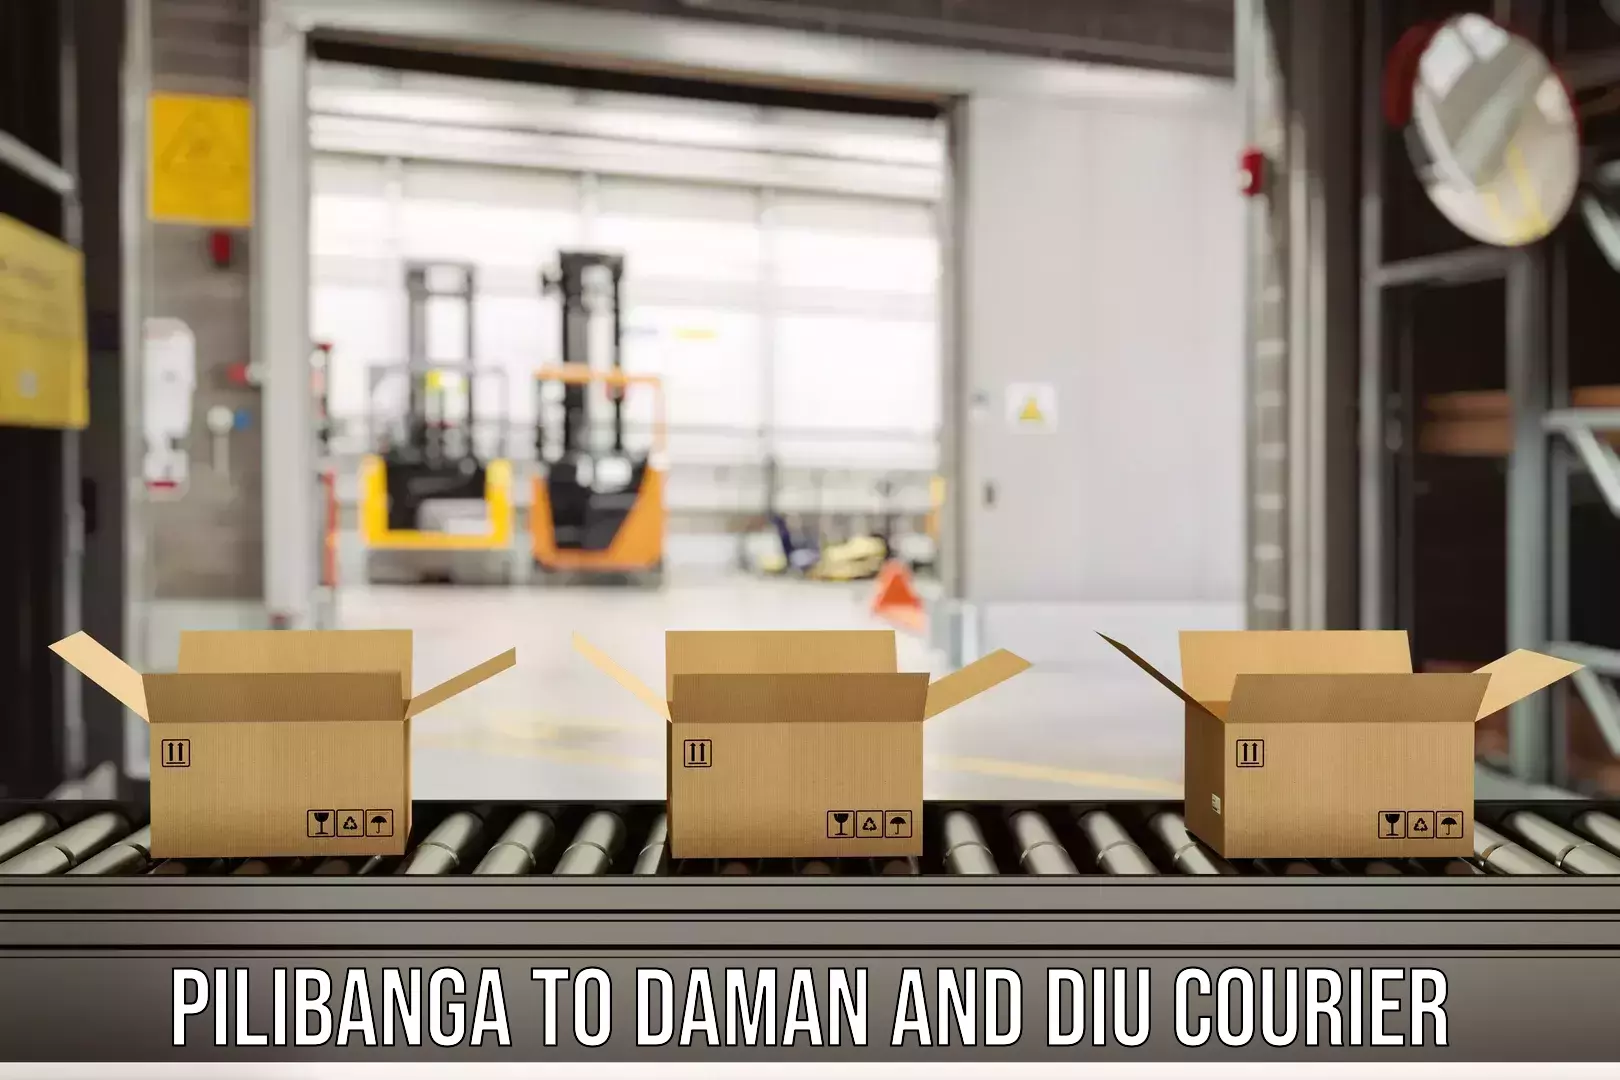 Shipping and handling Pilibanga to Diu